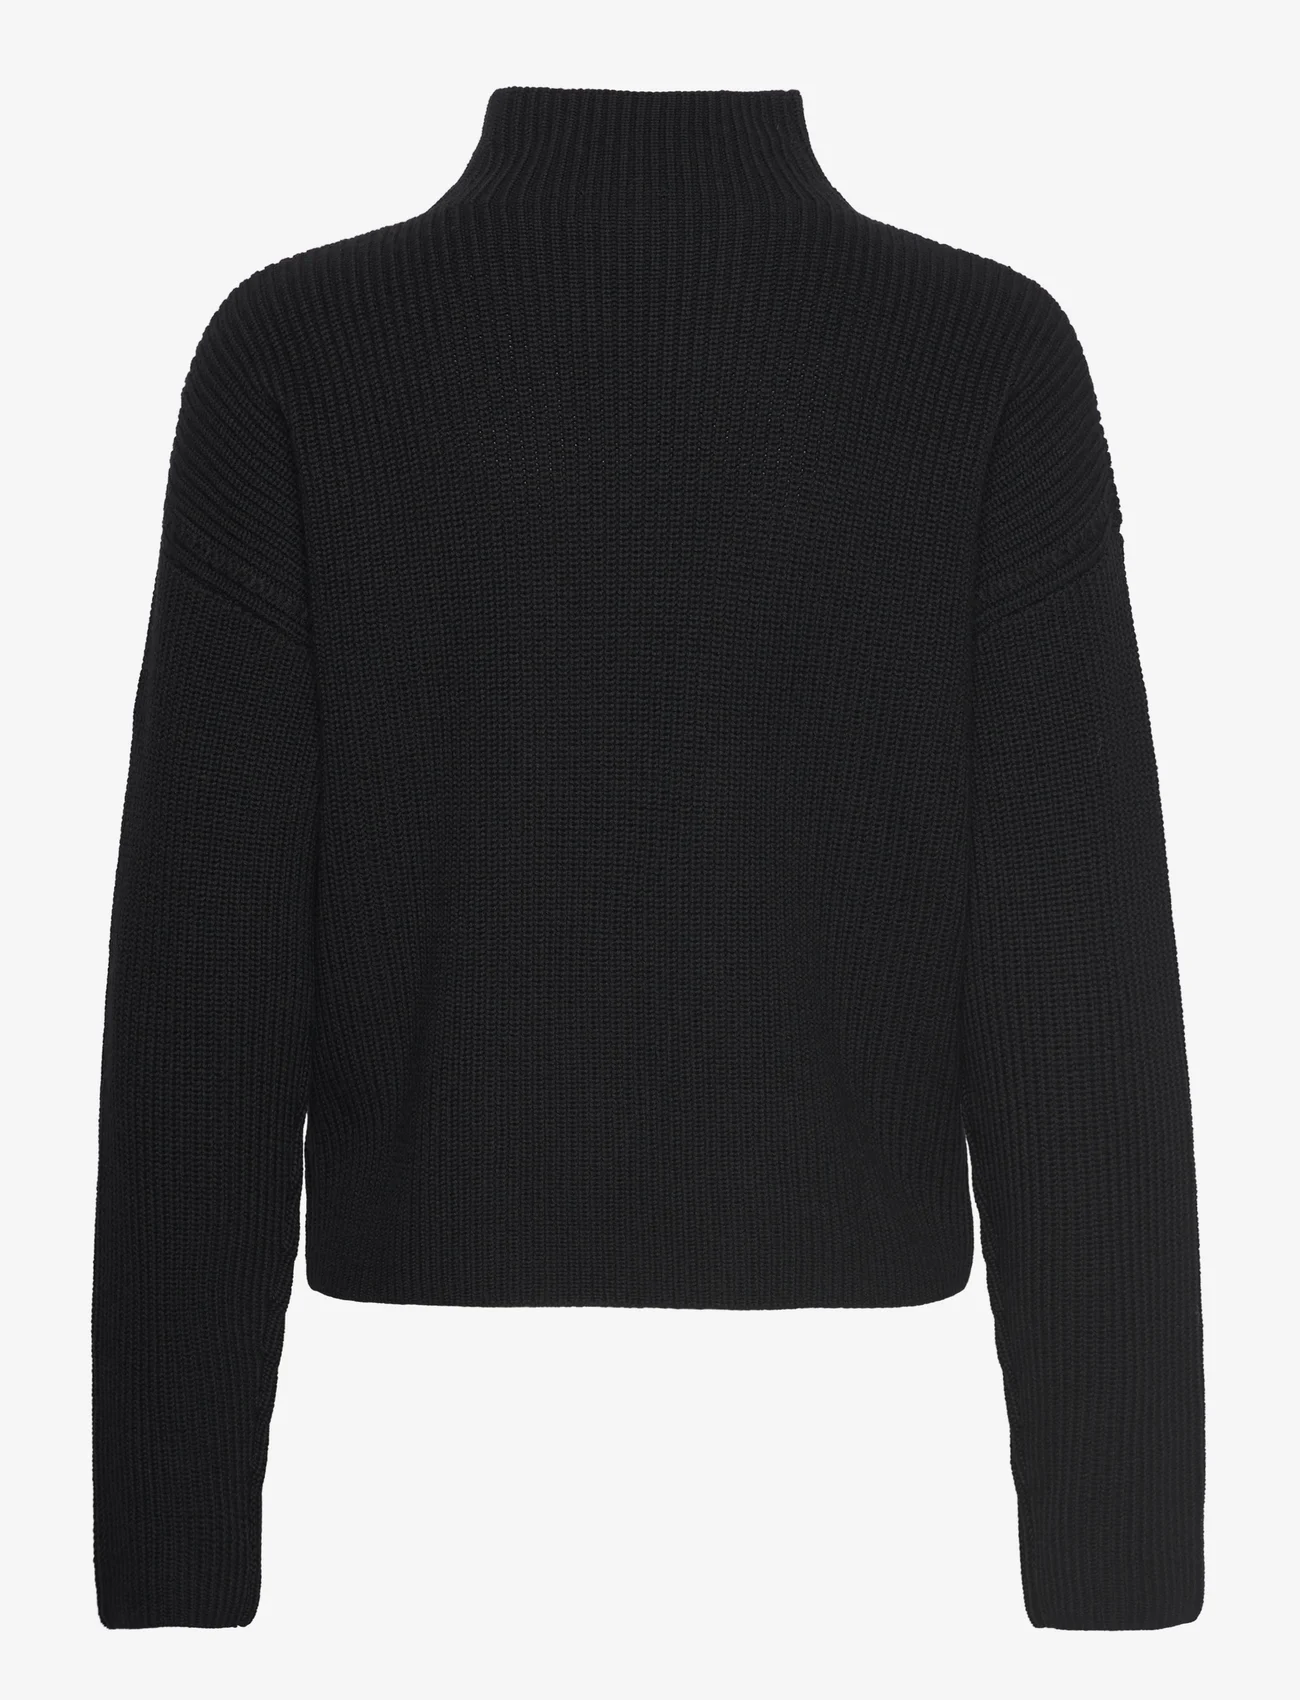 Filippa K - Willow Sweater - pullover - black - 1